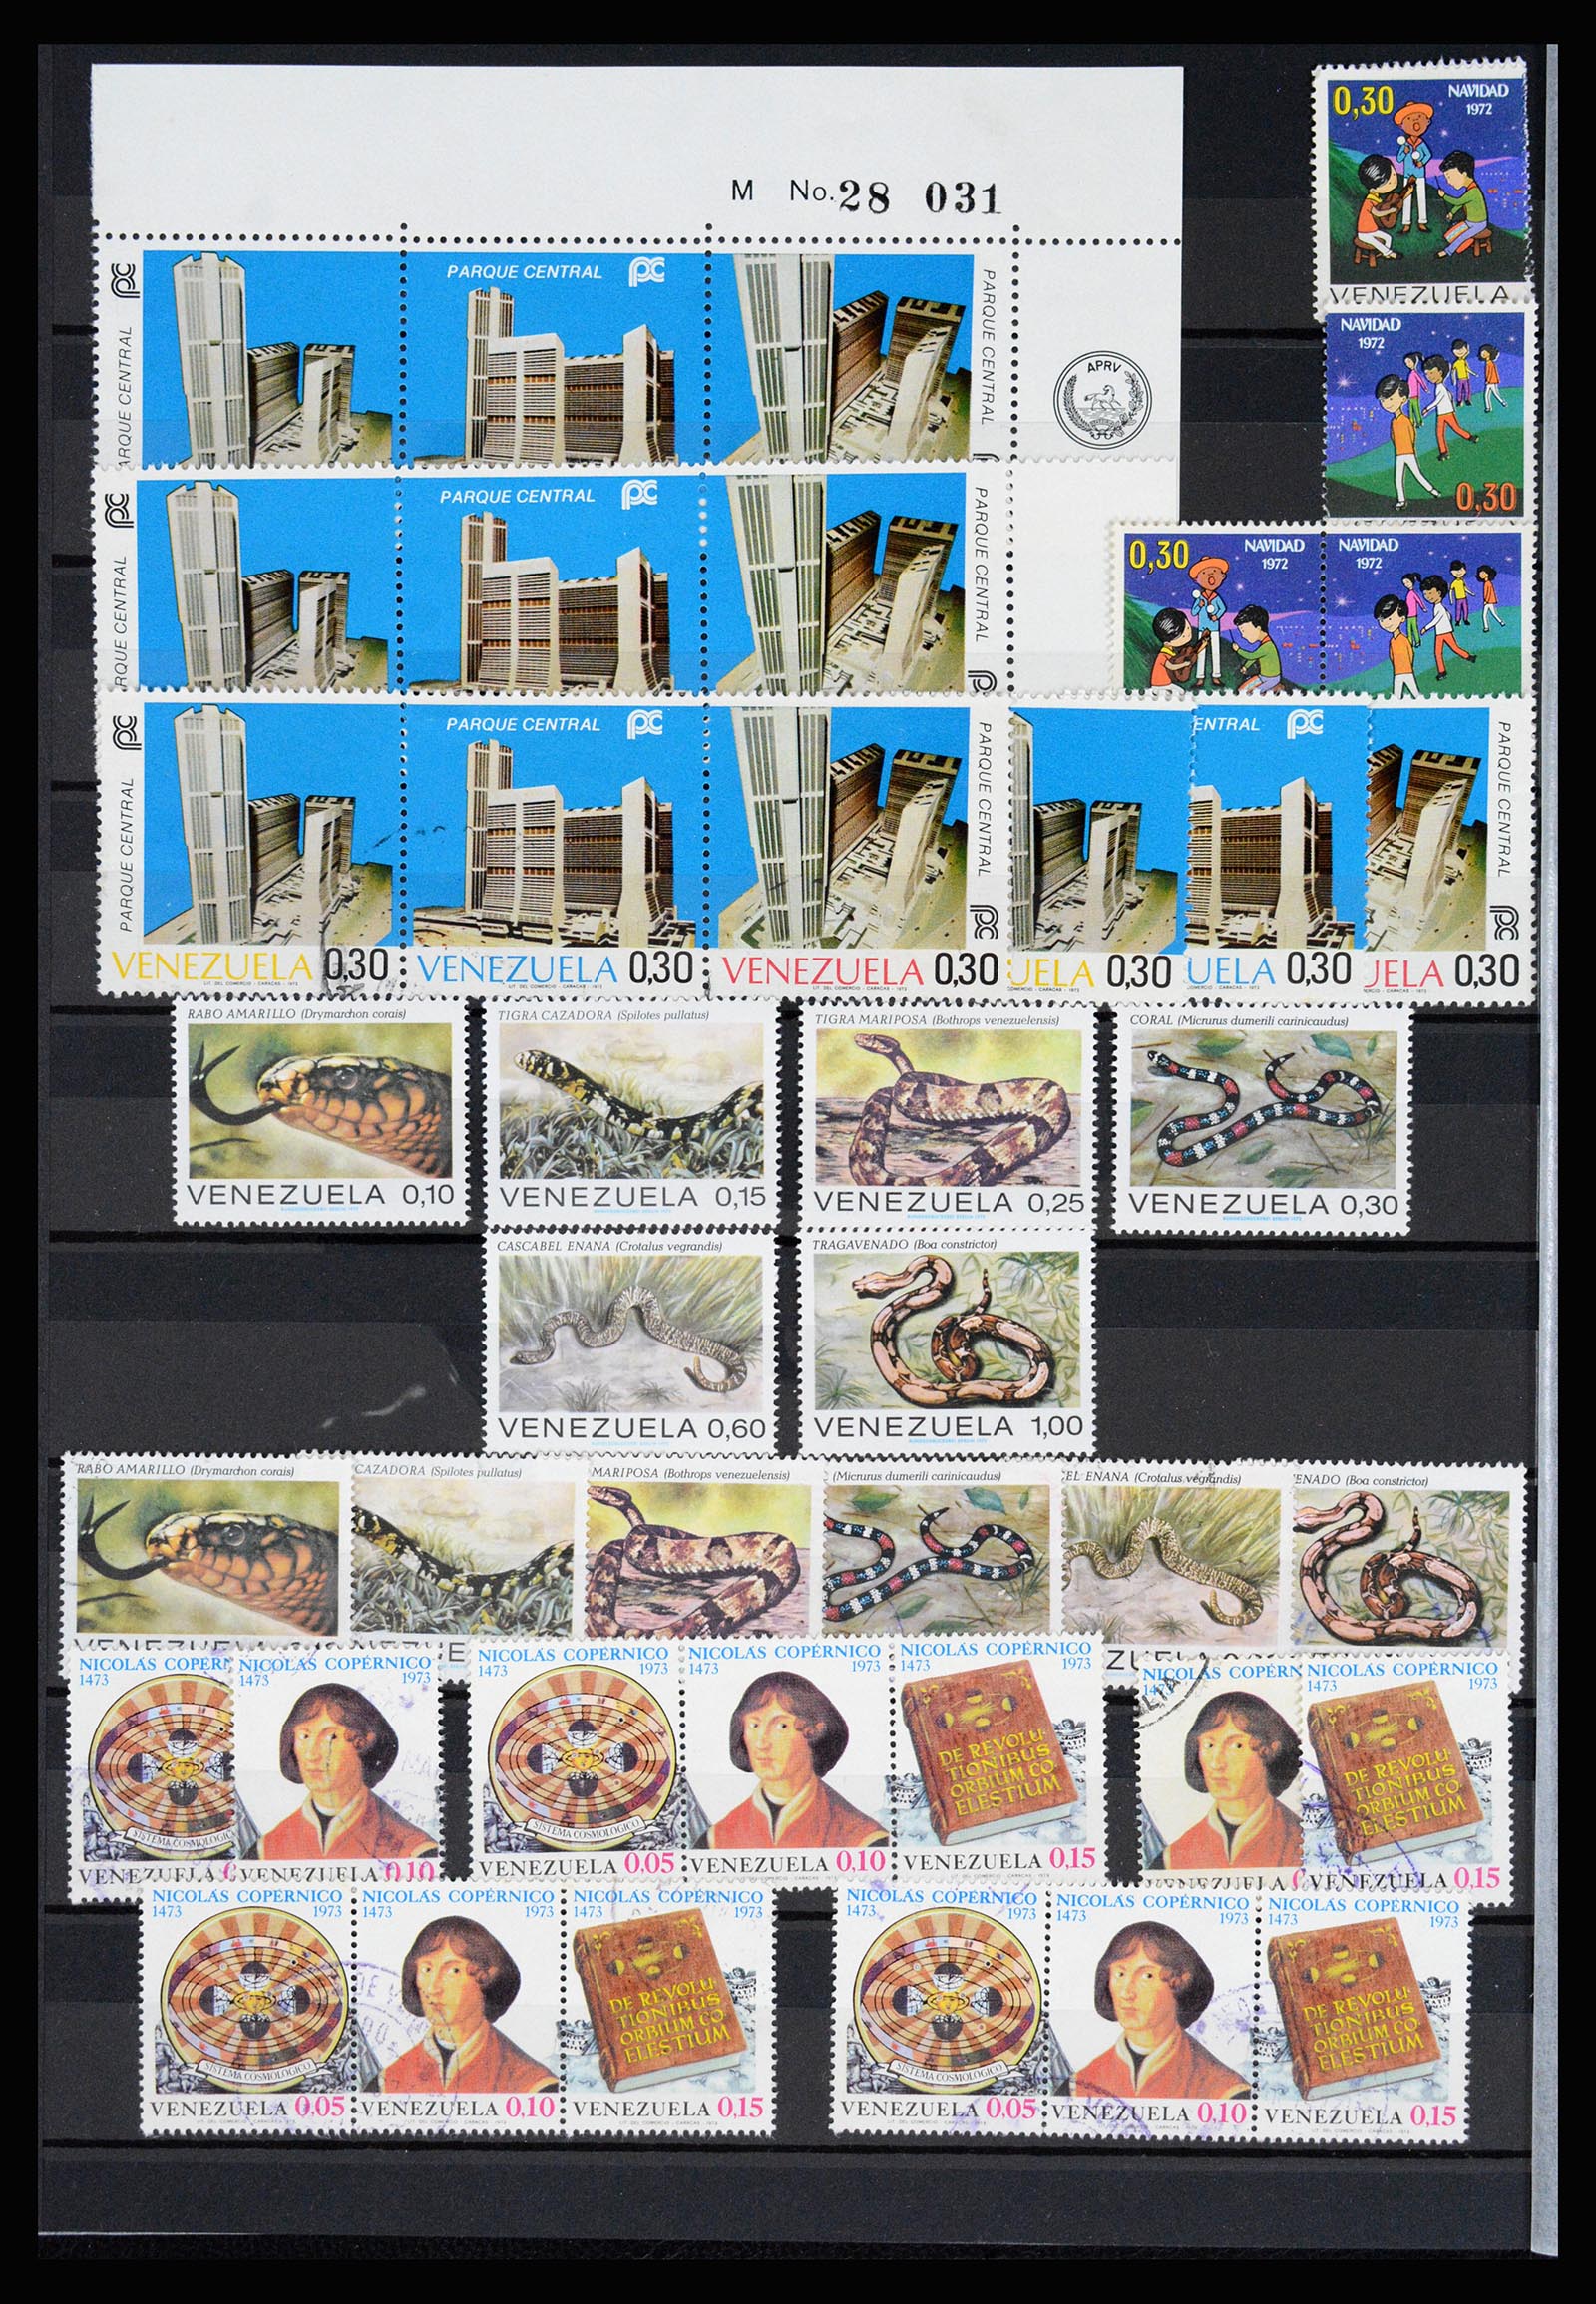 36987 063 - Stamp collection 36987 Venezuela 1860-1995.